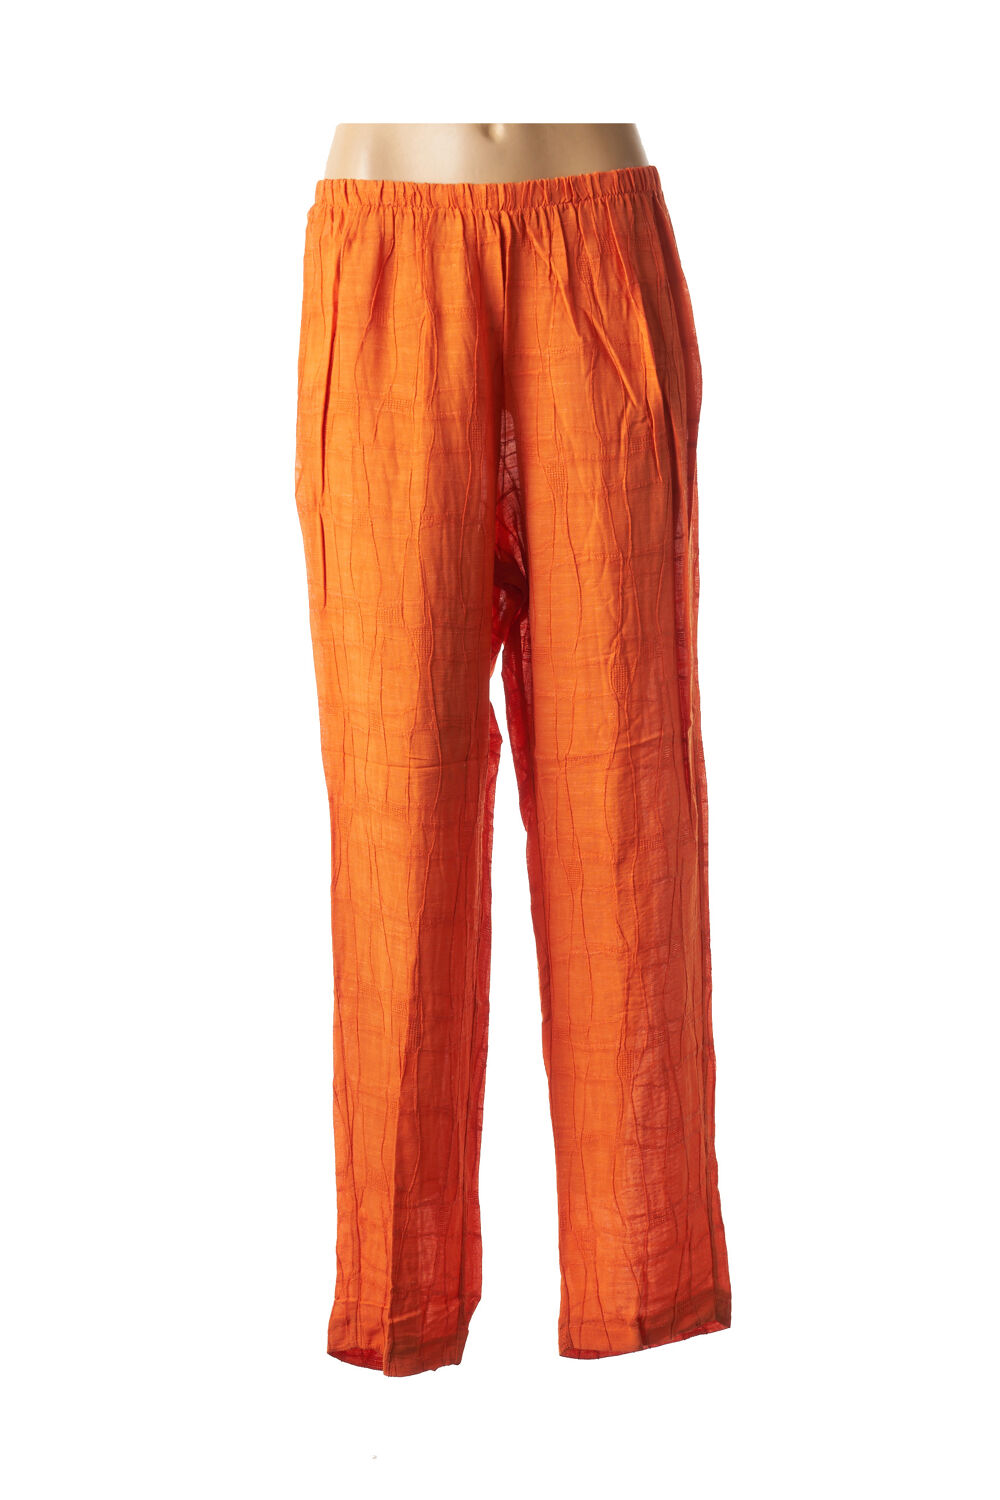 Pantalon 7/8 femme Altina orange taille : 46 Vtements